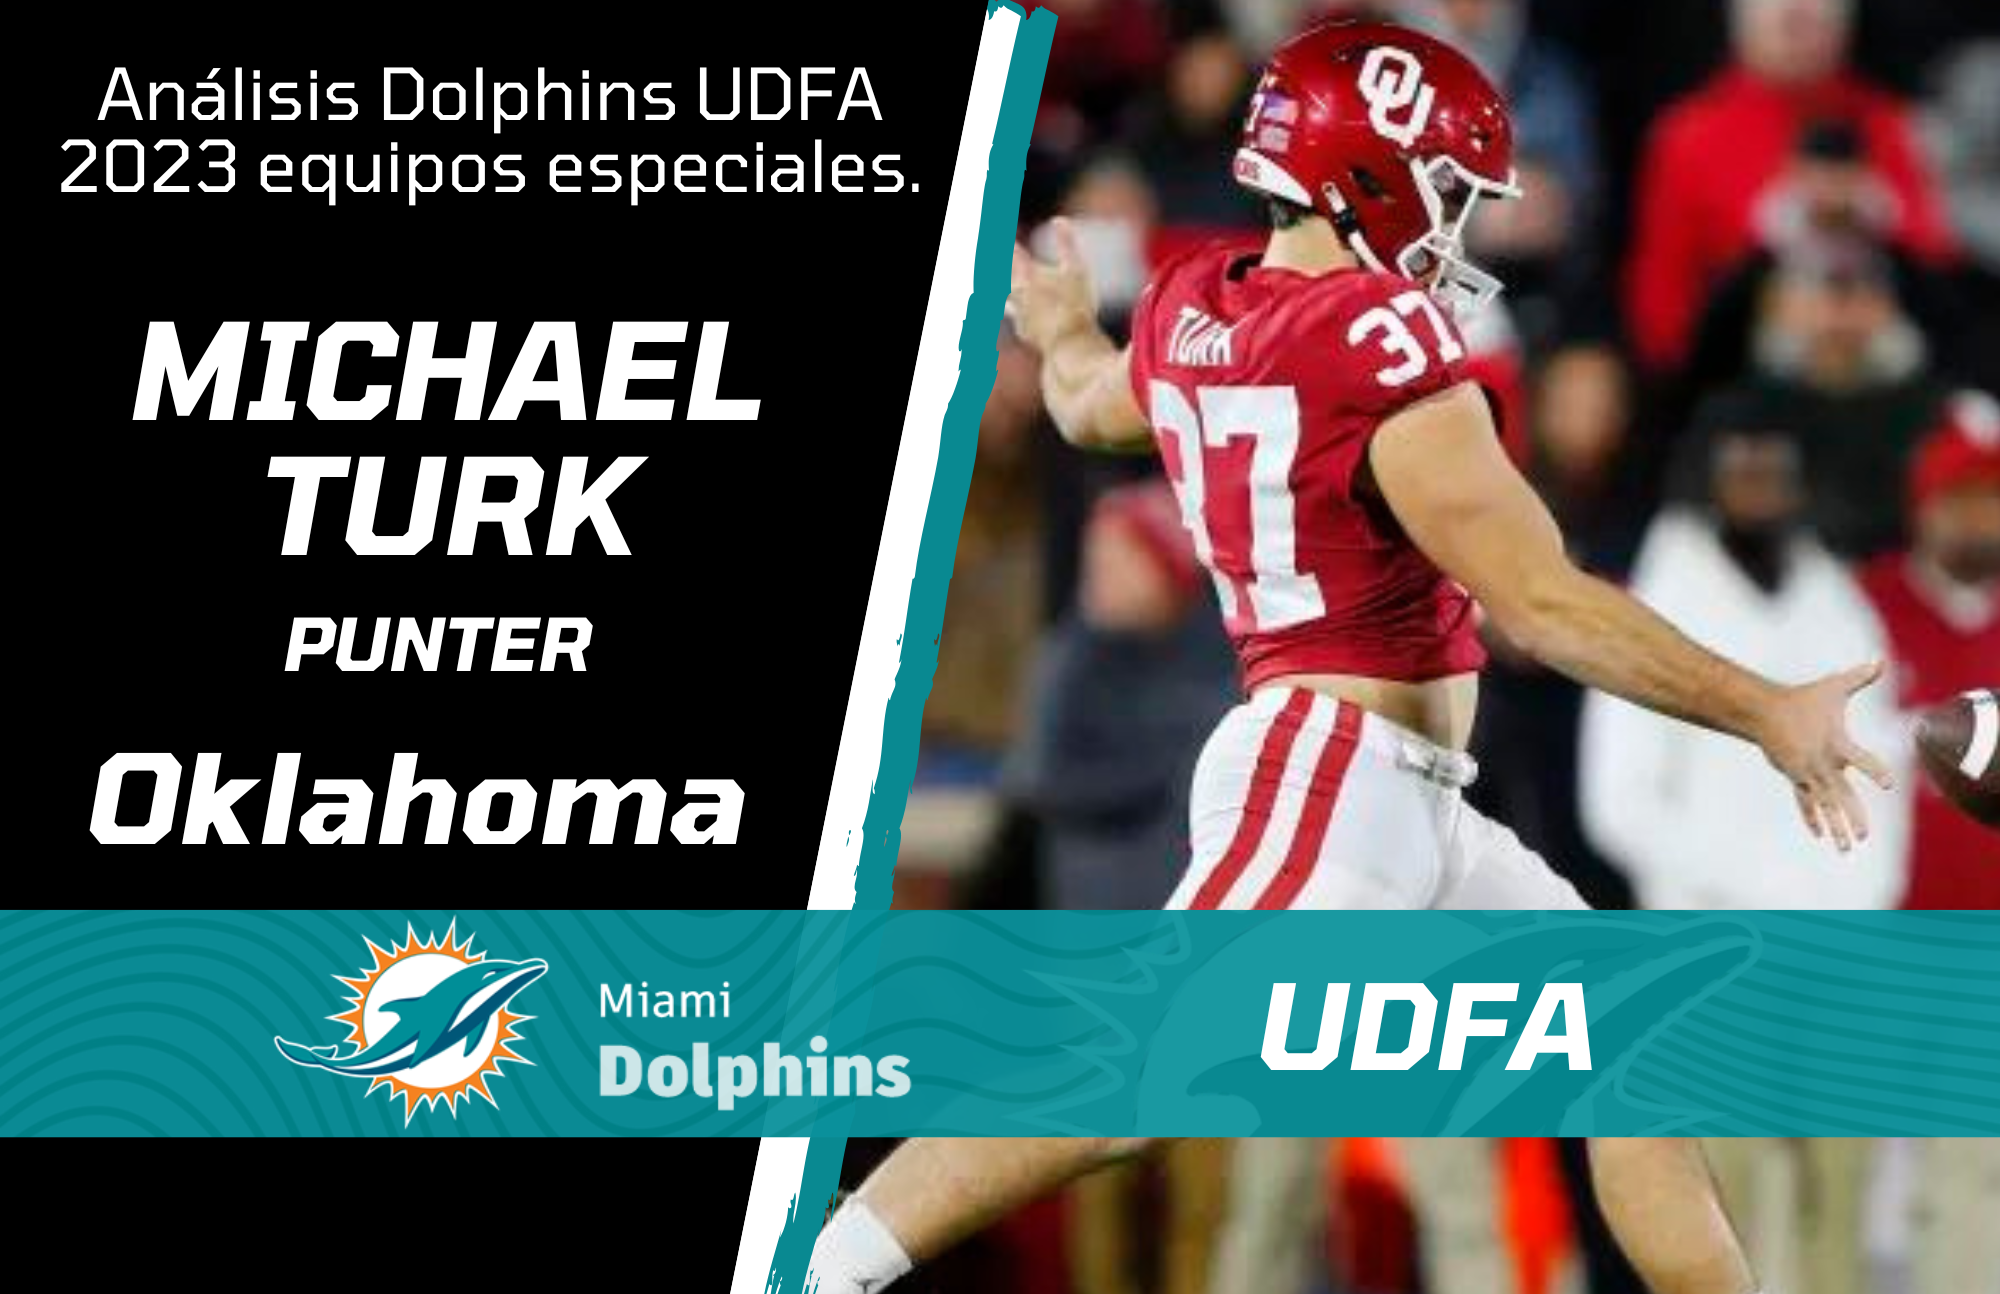 Michael Turk signed as Miami Dolphins, Oklahoma punter Michael Turk signs UDFA deal with Dolphins,  Michael Turk University of Oklahoma